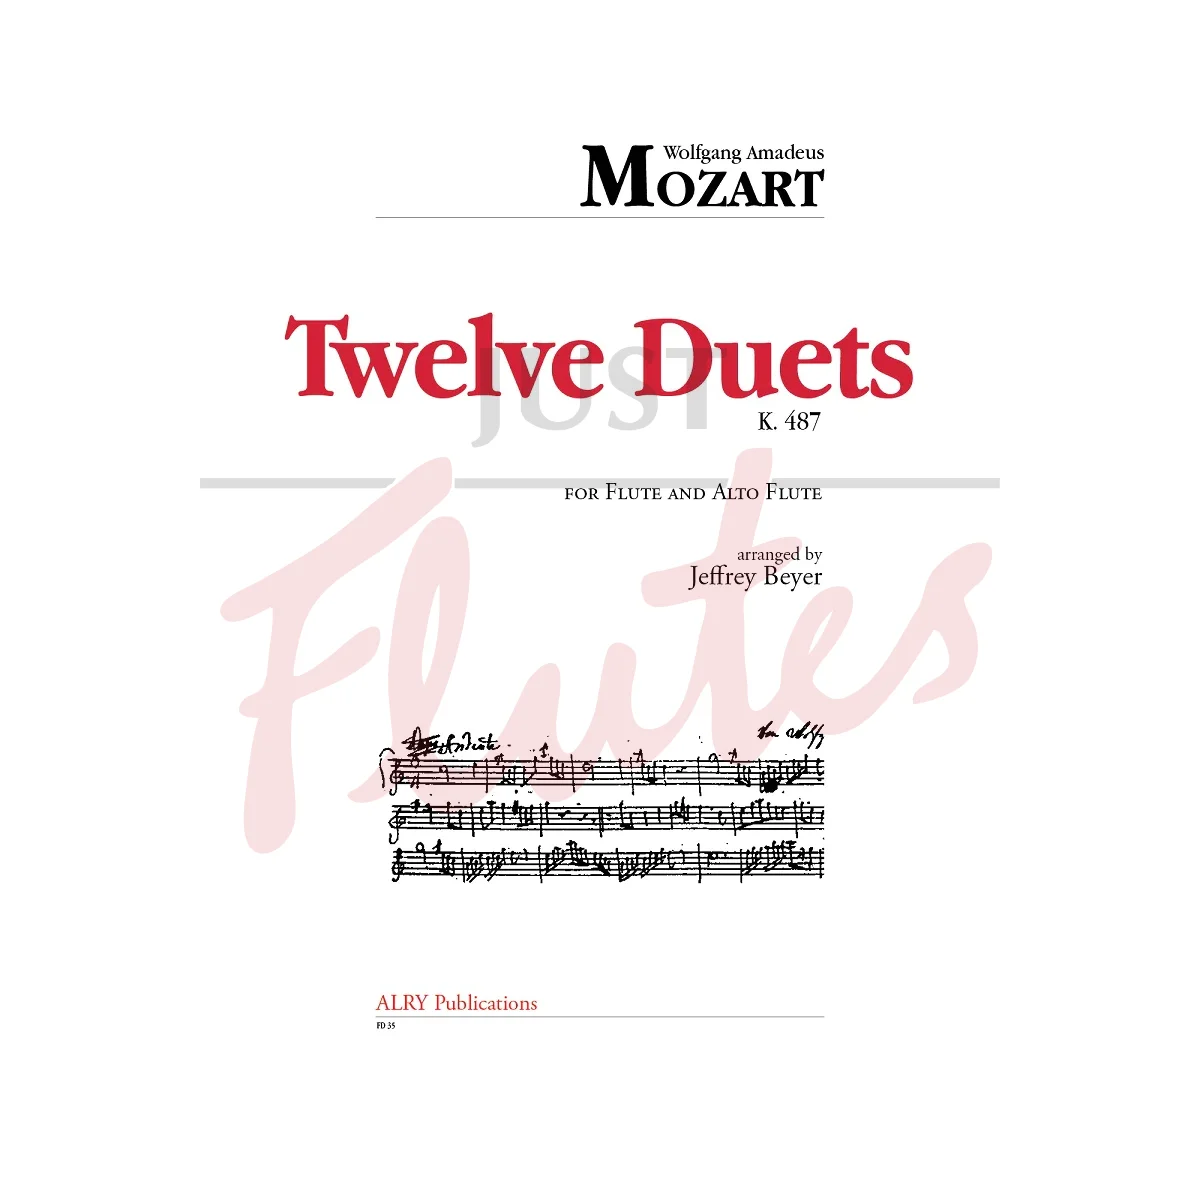 Twelve Duets for Flute and Alto Flute